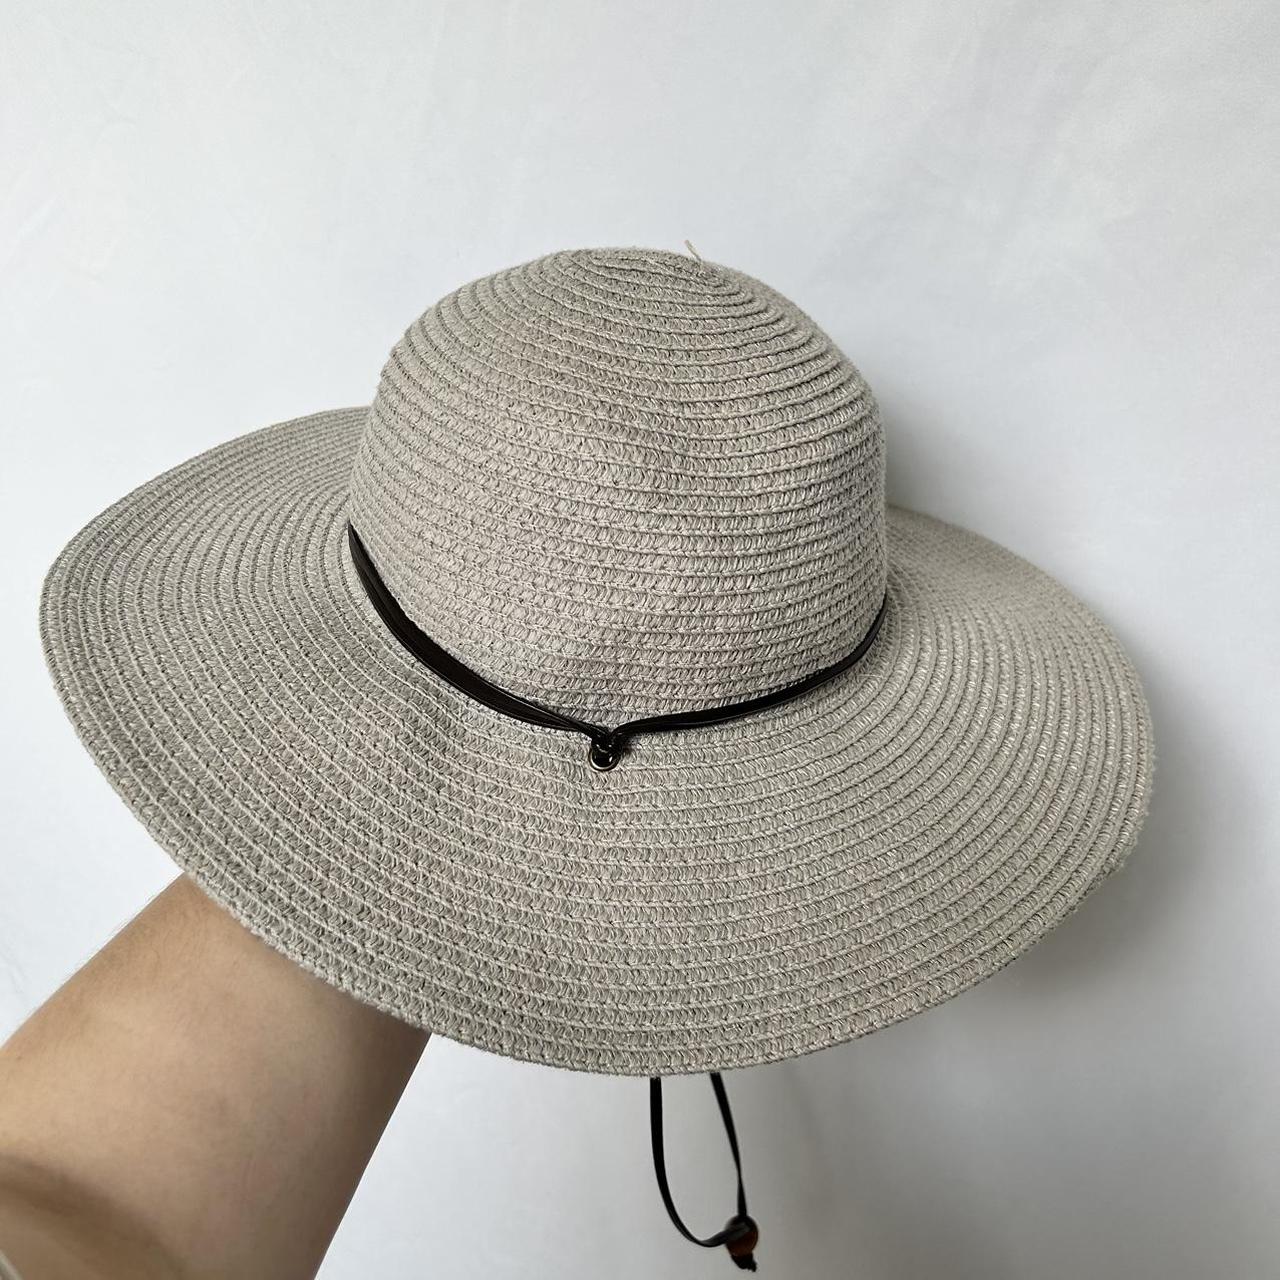 Gold Coast Sunwear Hat, • like new!, • tan & dark